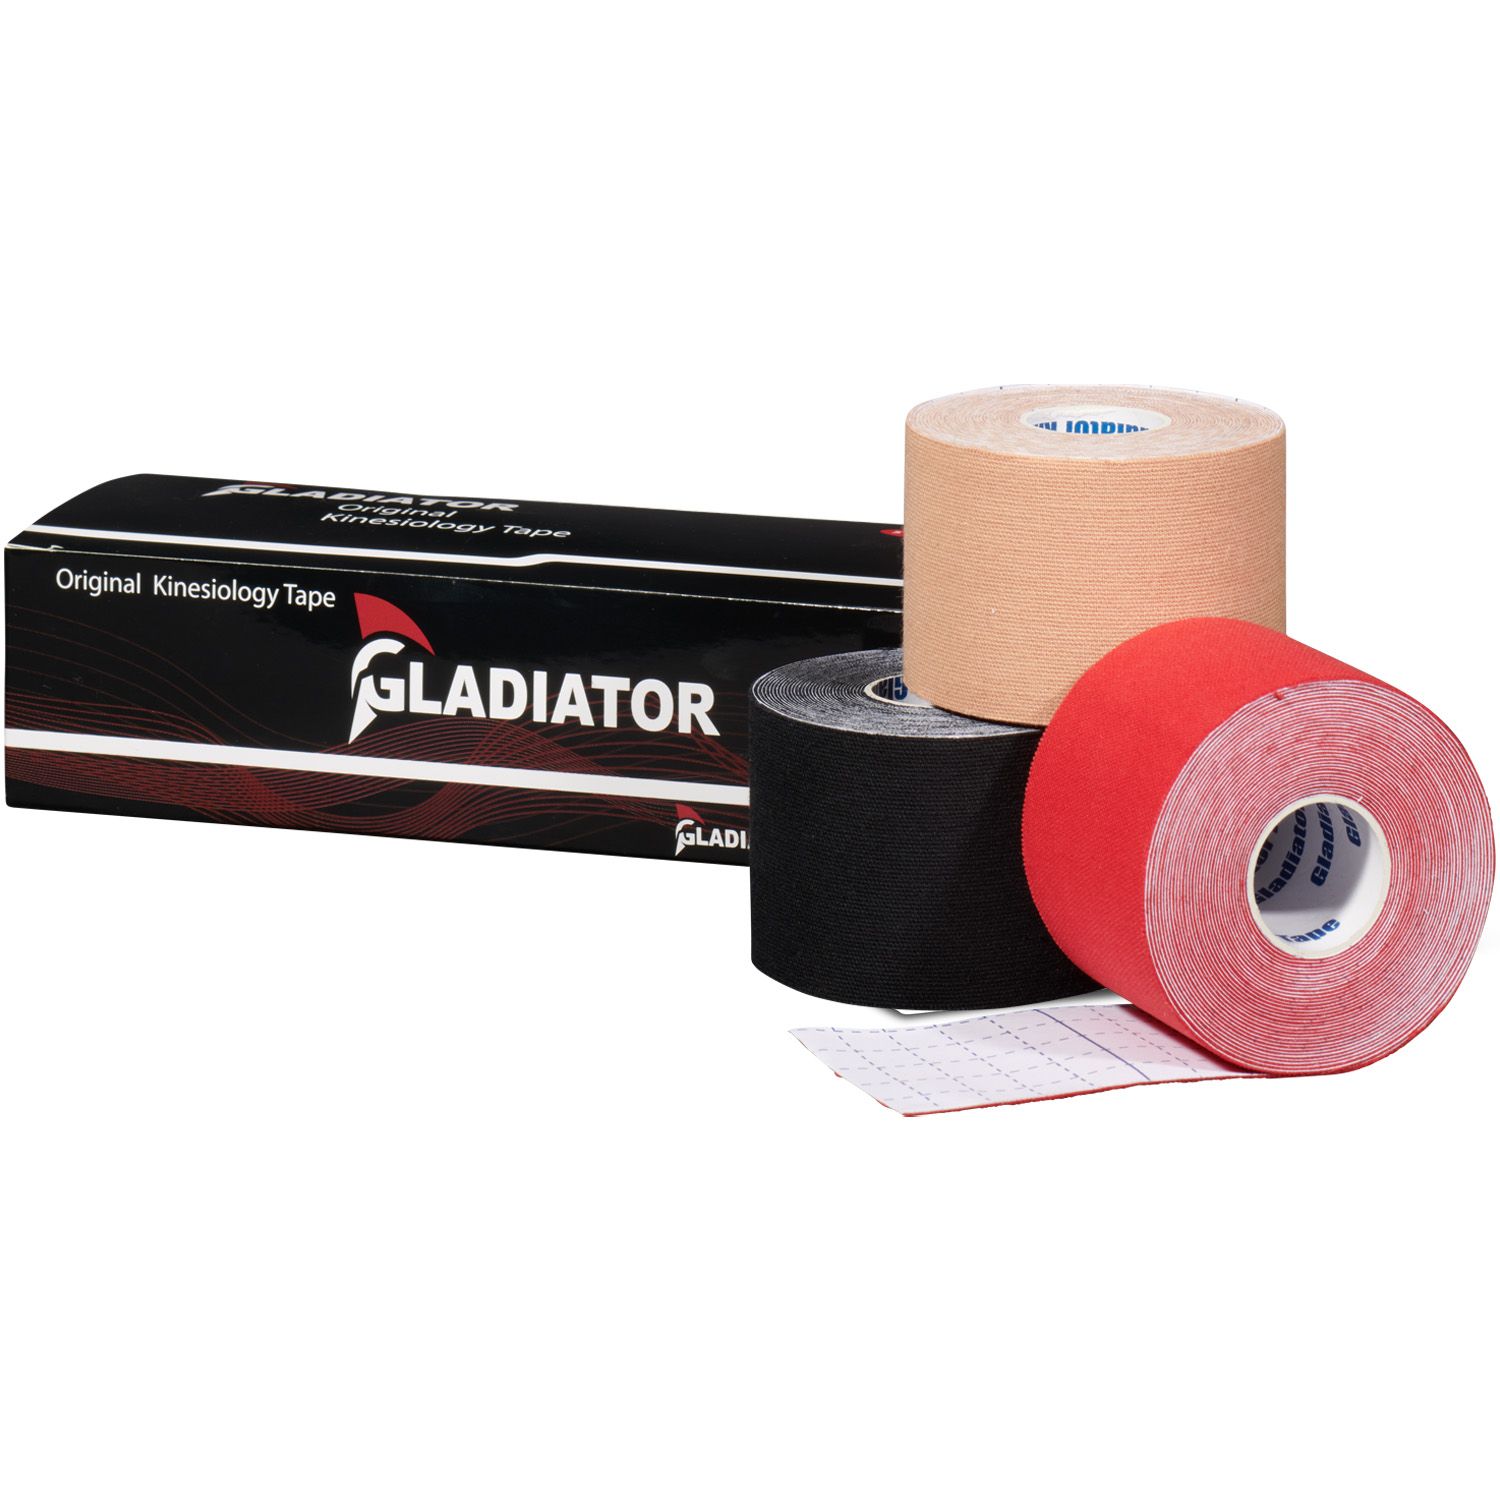 Gladiator sports kinesiology tape three rolls with box